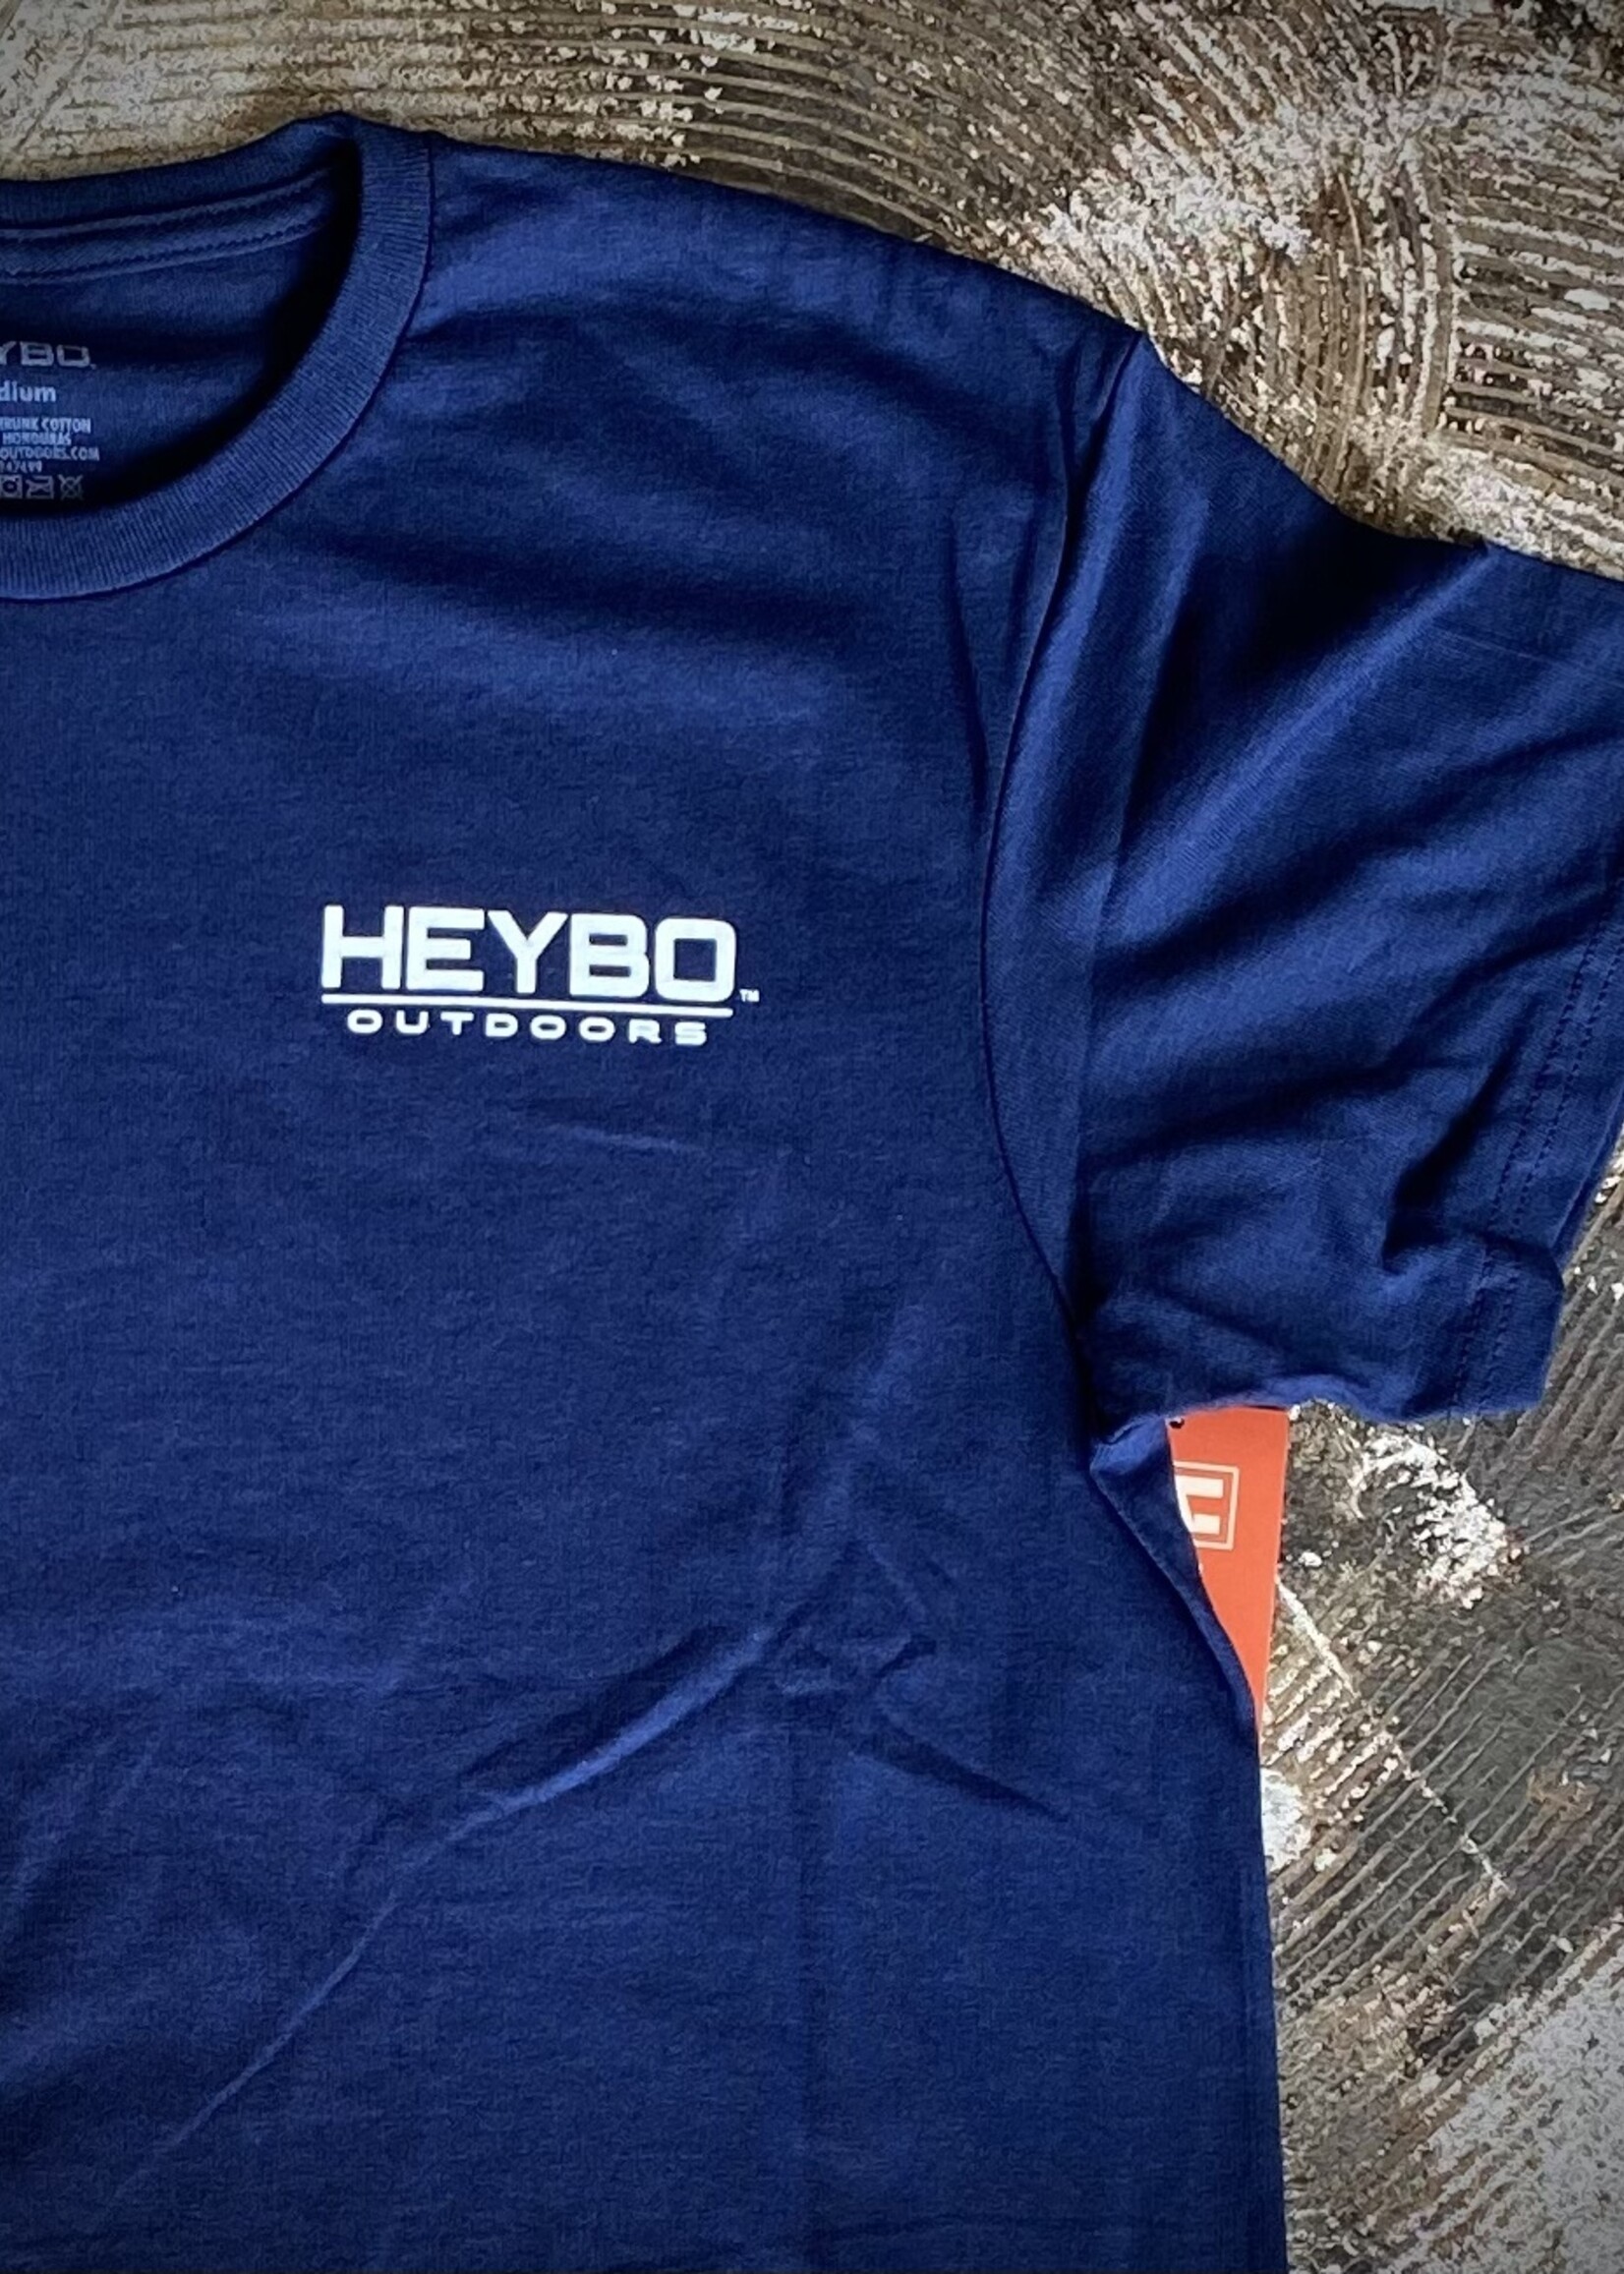 Heybo Heybo - Duck Call Flag T-shirt